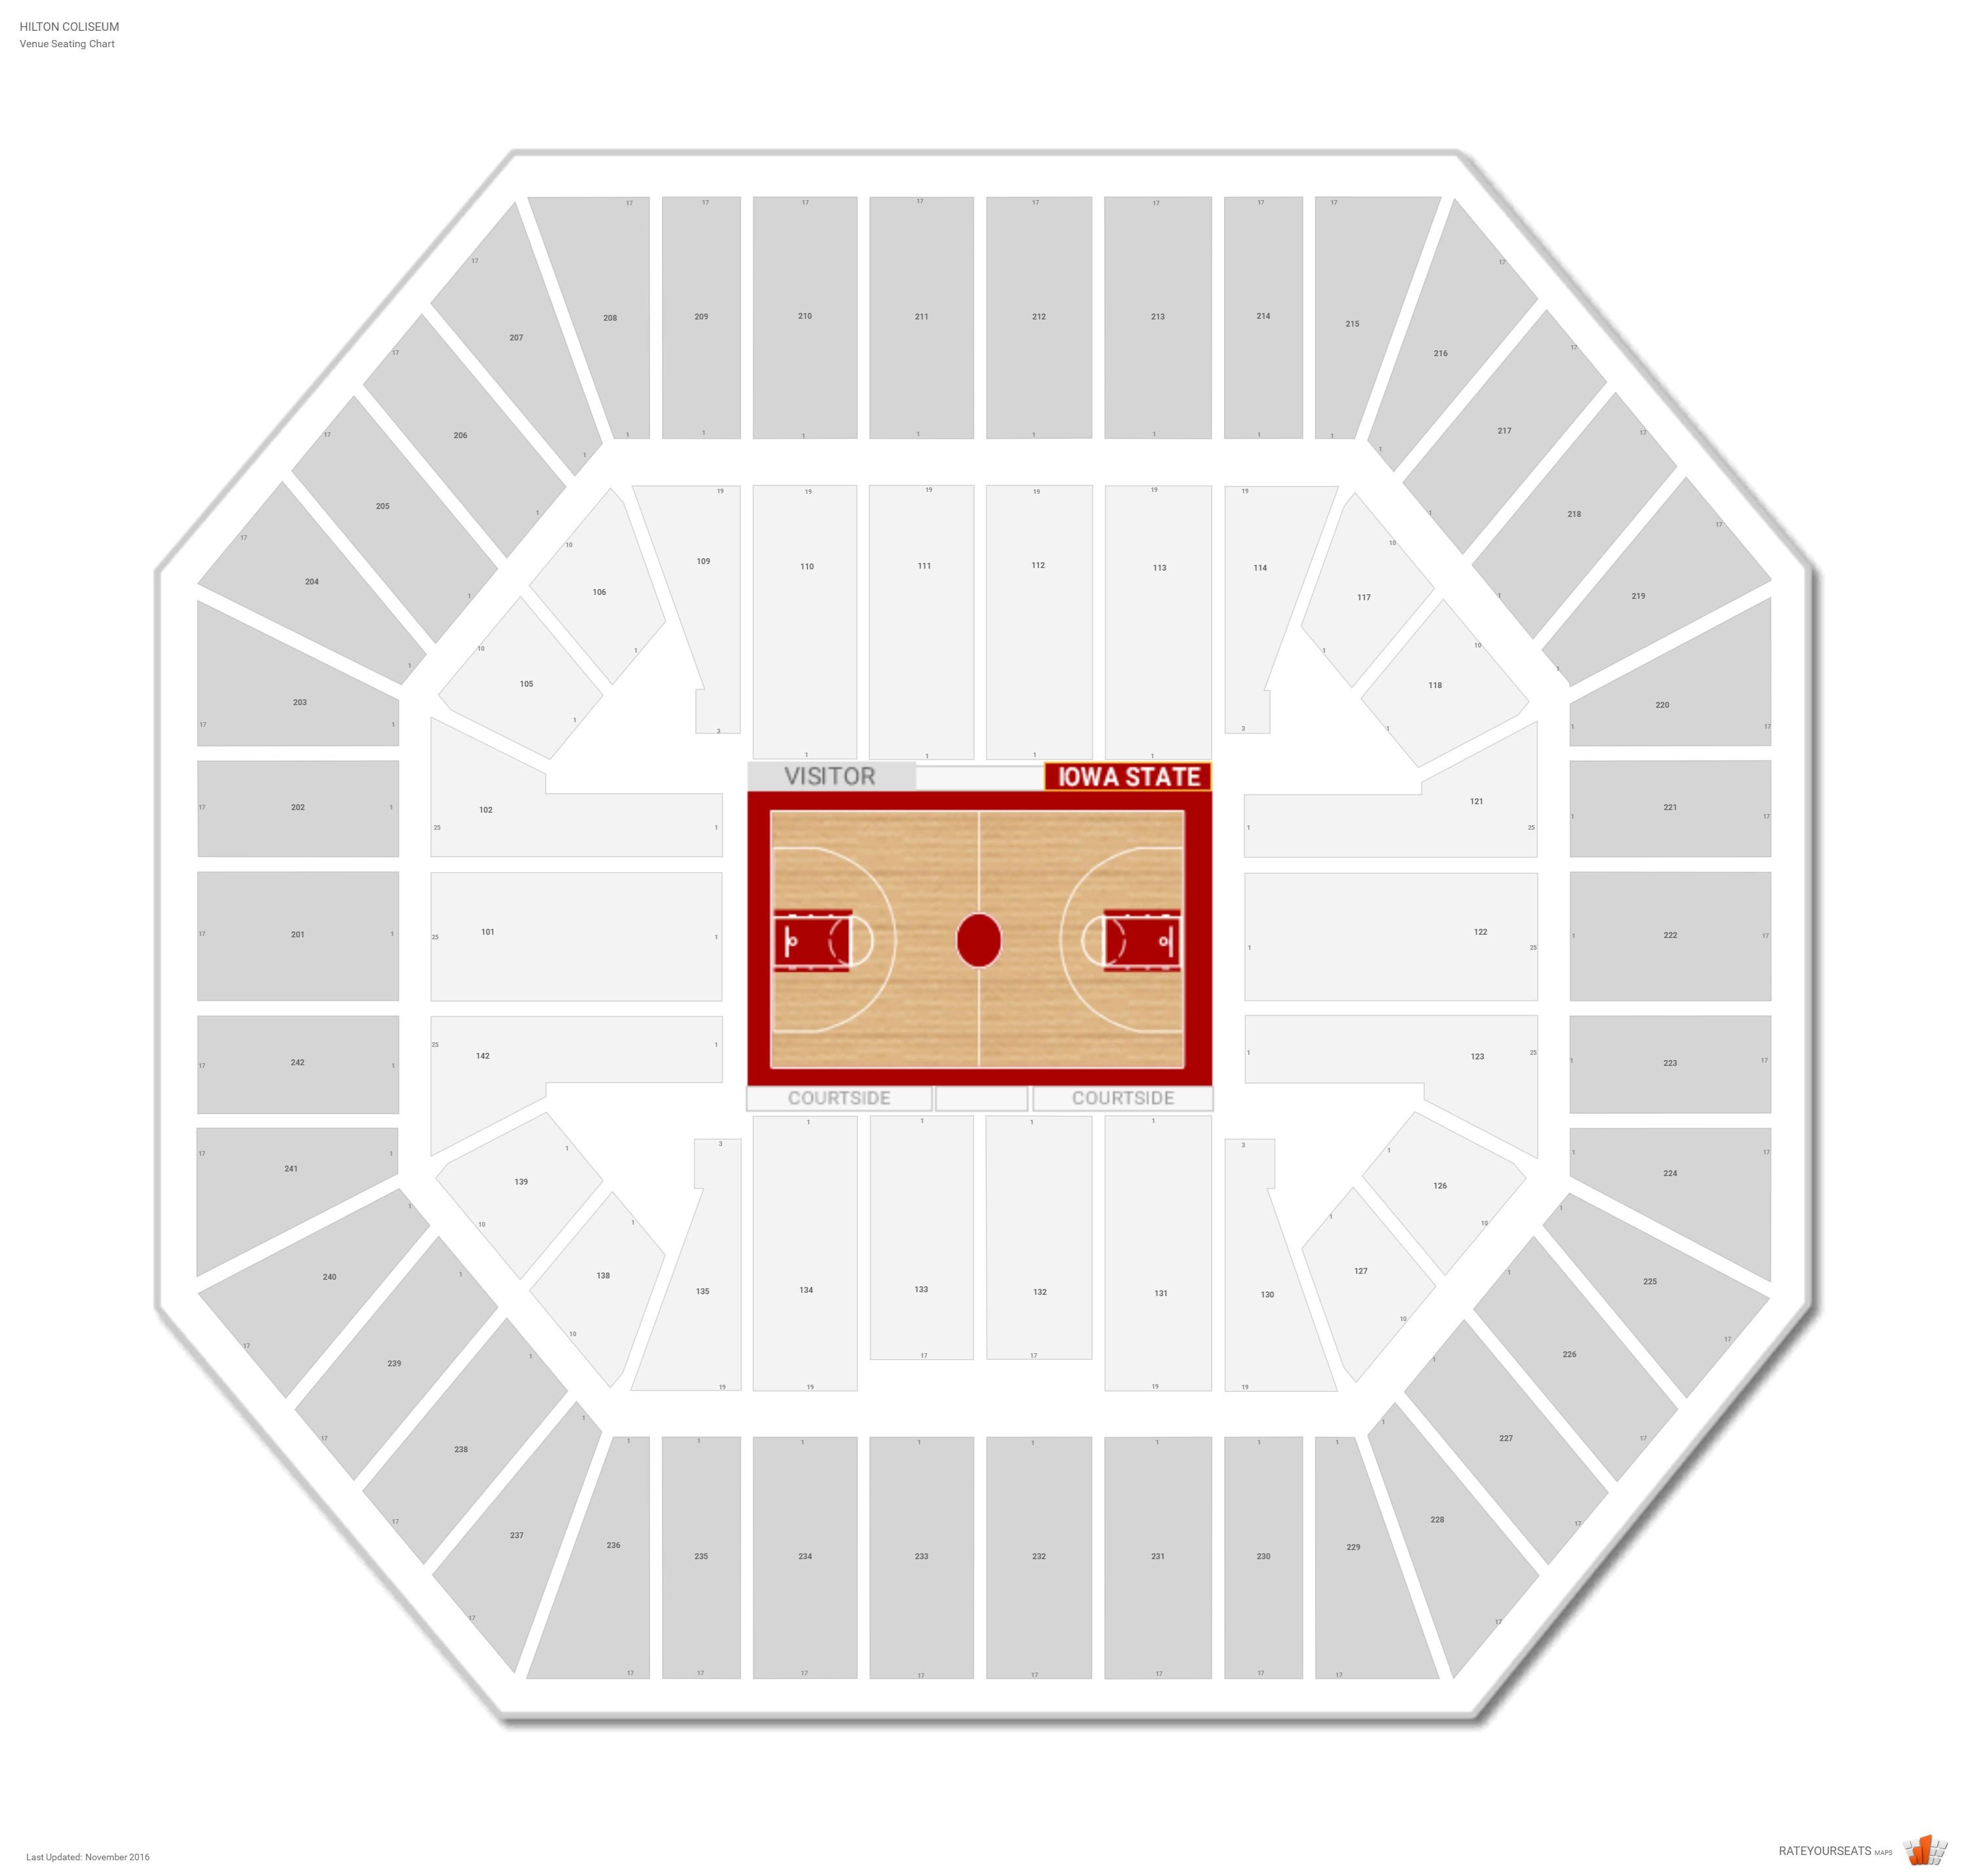 Hilton Coliseum Seating Chart Wrestling